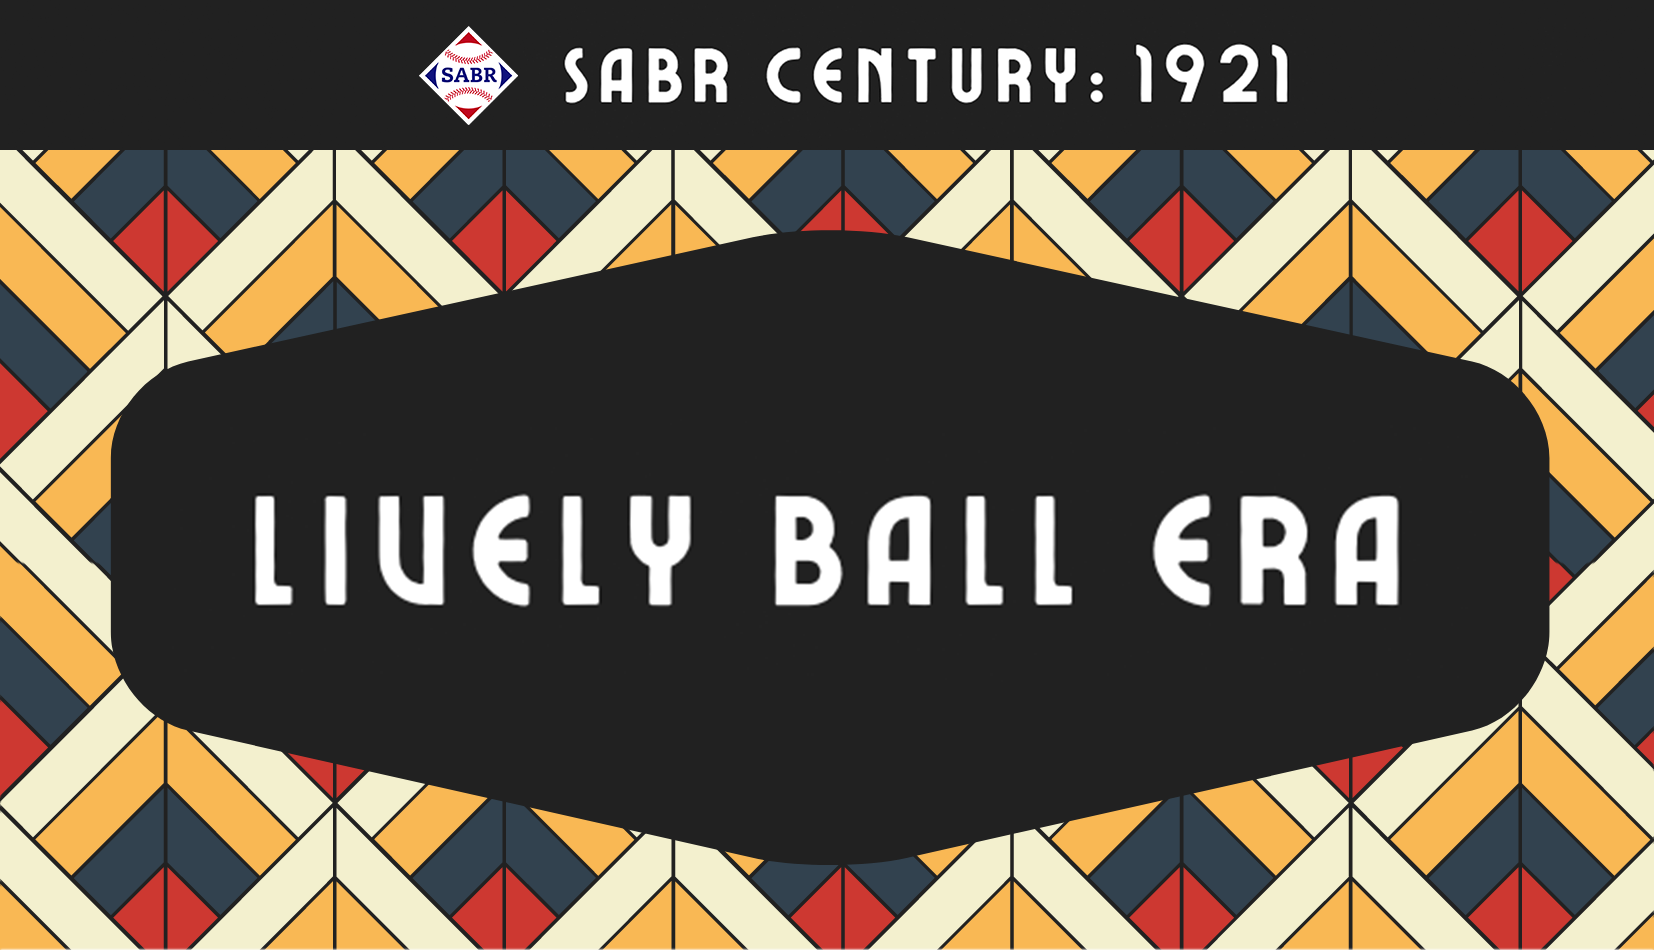 SABR Century 1921: Lively Ball Era